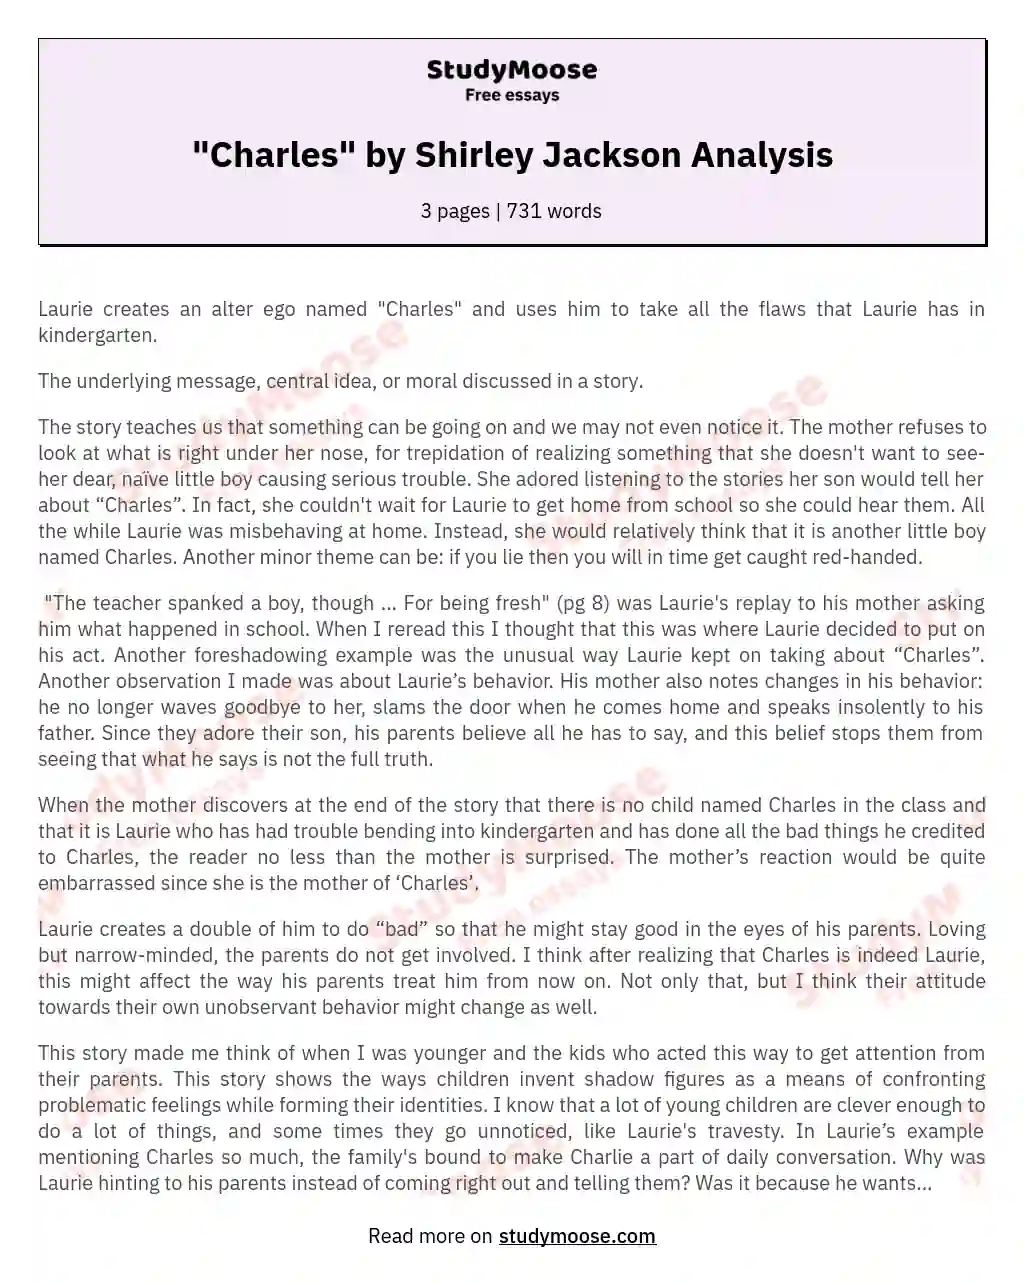 "Charles" by Shirley Jackson Analysis essay